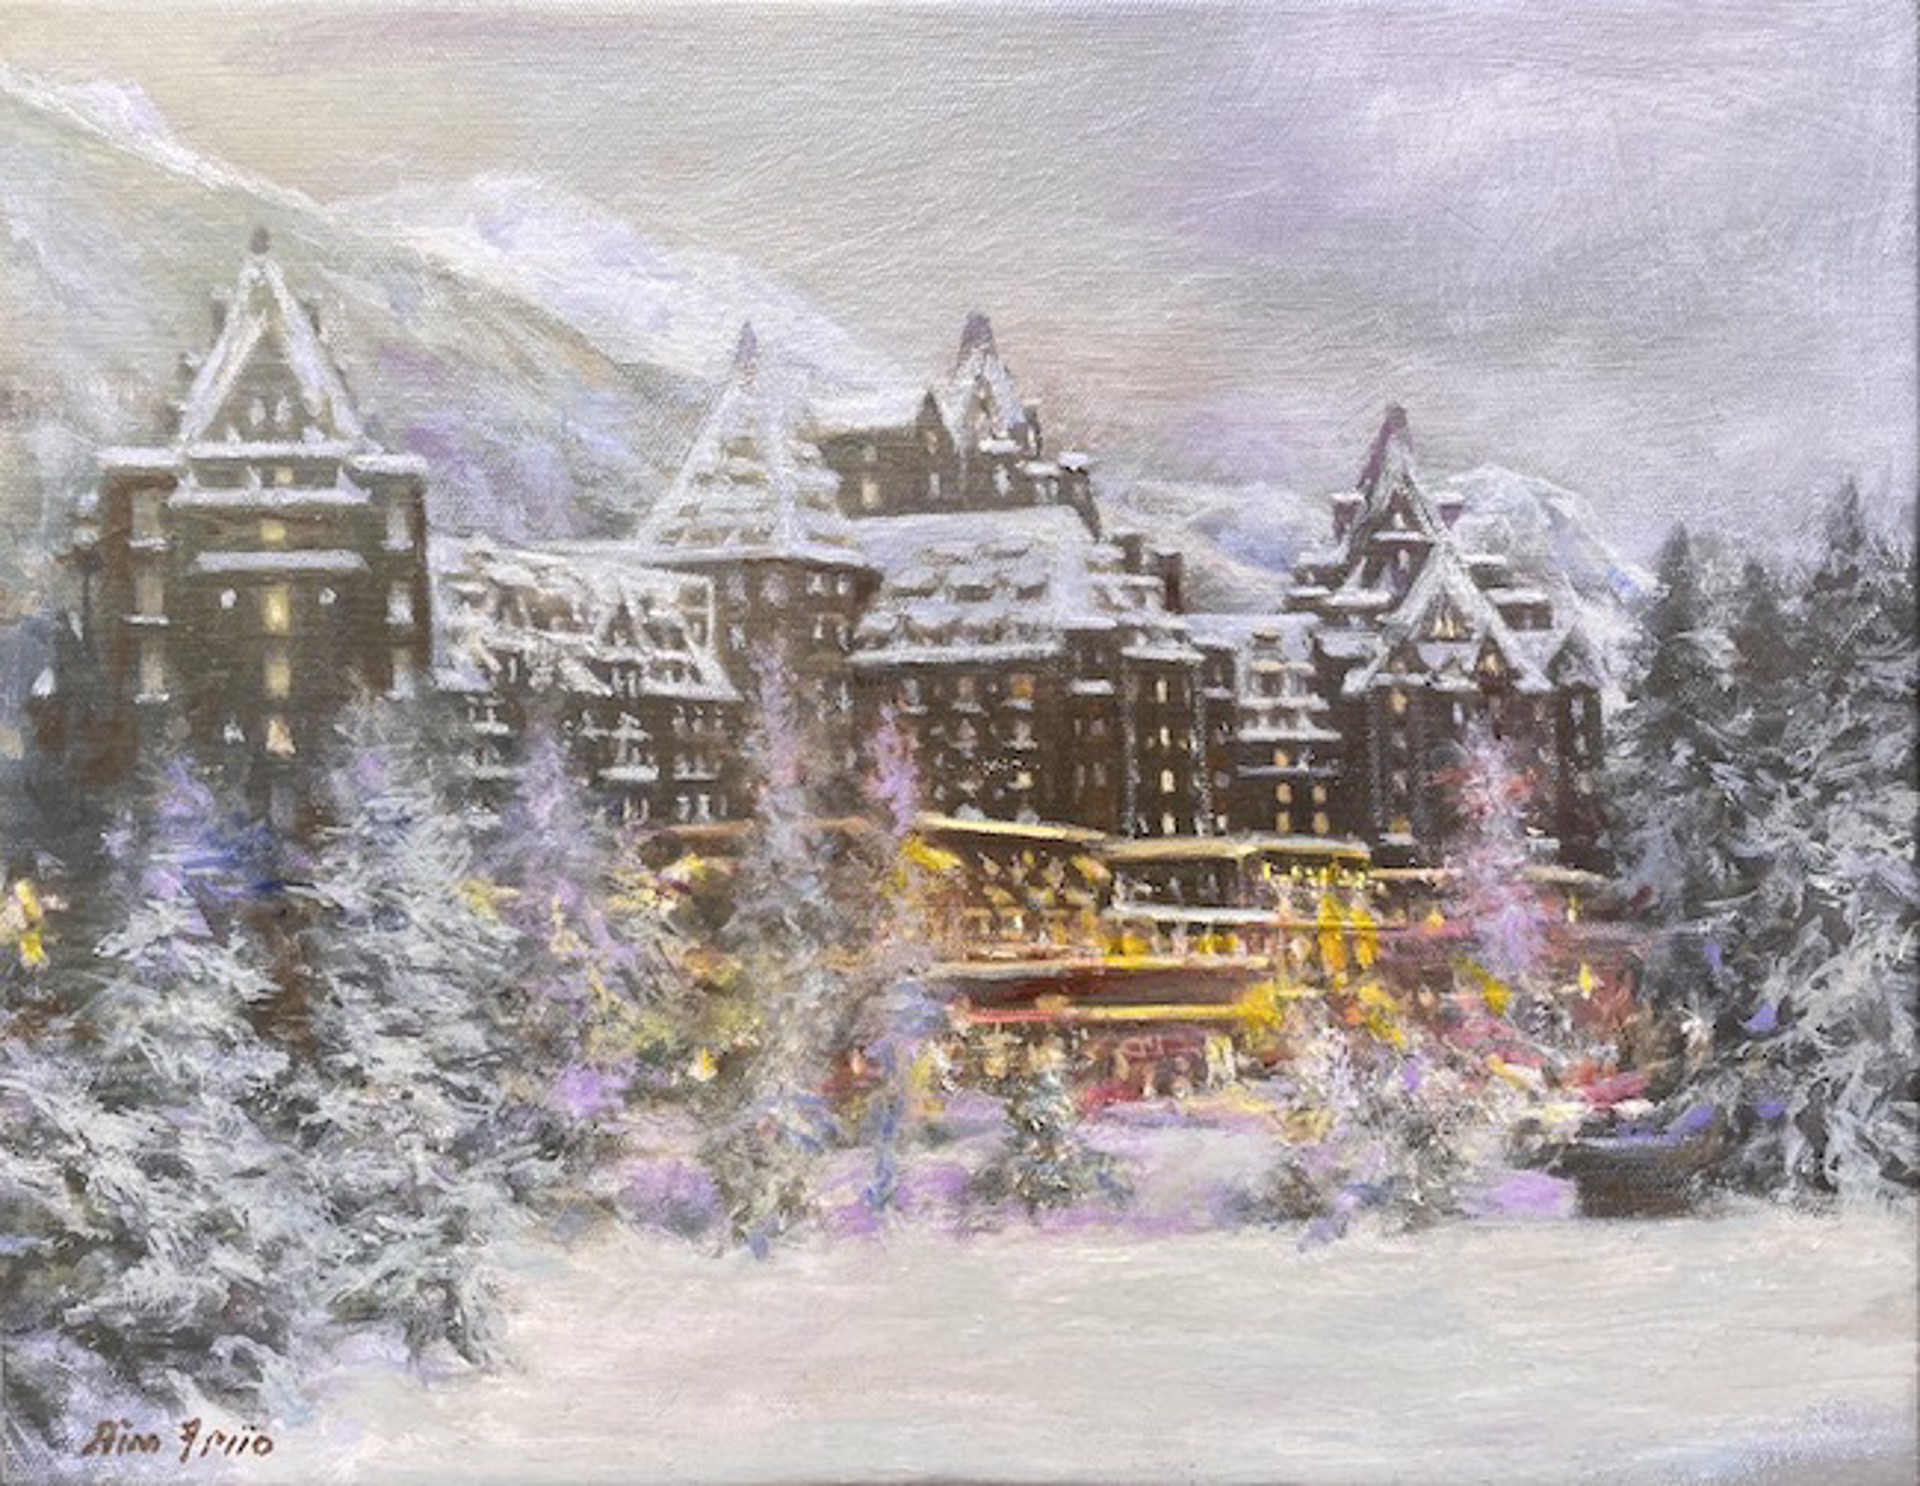 Banff Springs Winter Wonderland by Rino Friio